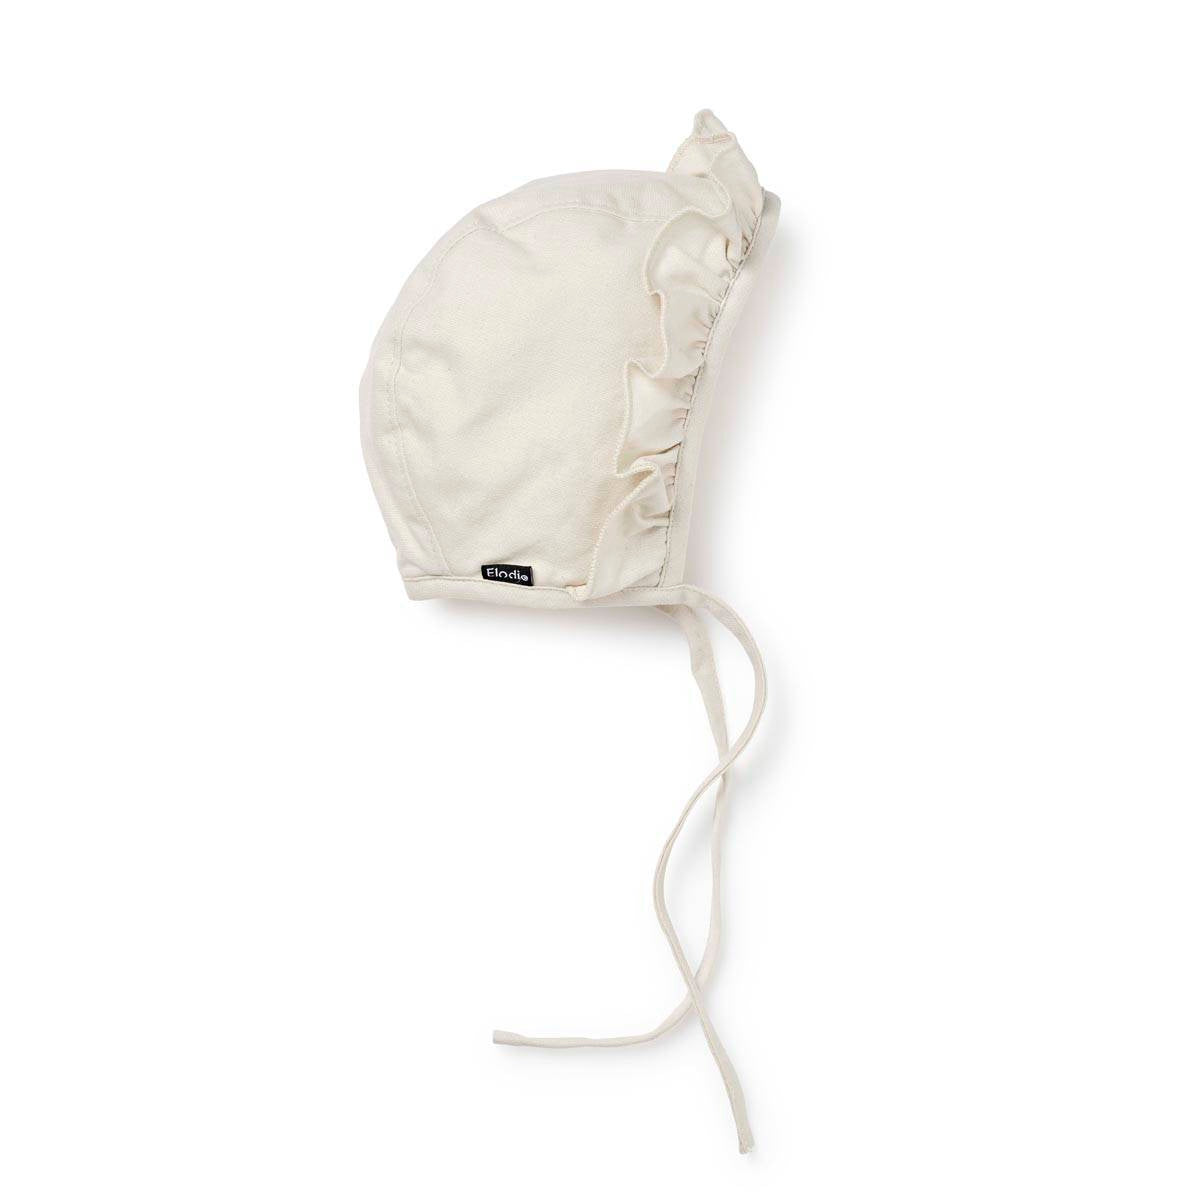 Czapka dla dziecka Elodie Details Winter Bonnet Creamy White 1 2 lata